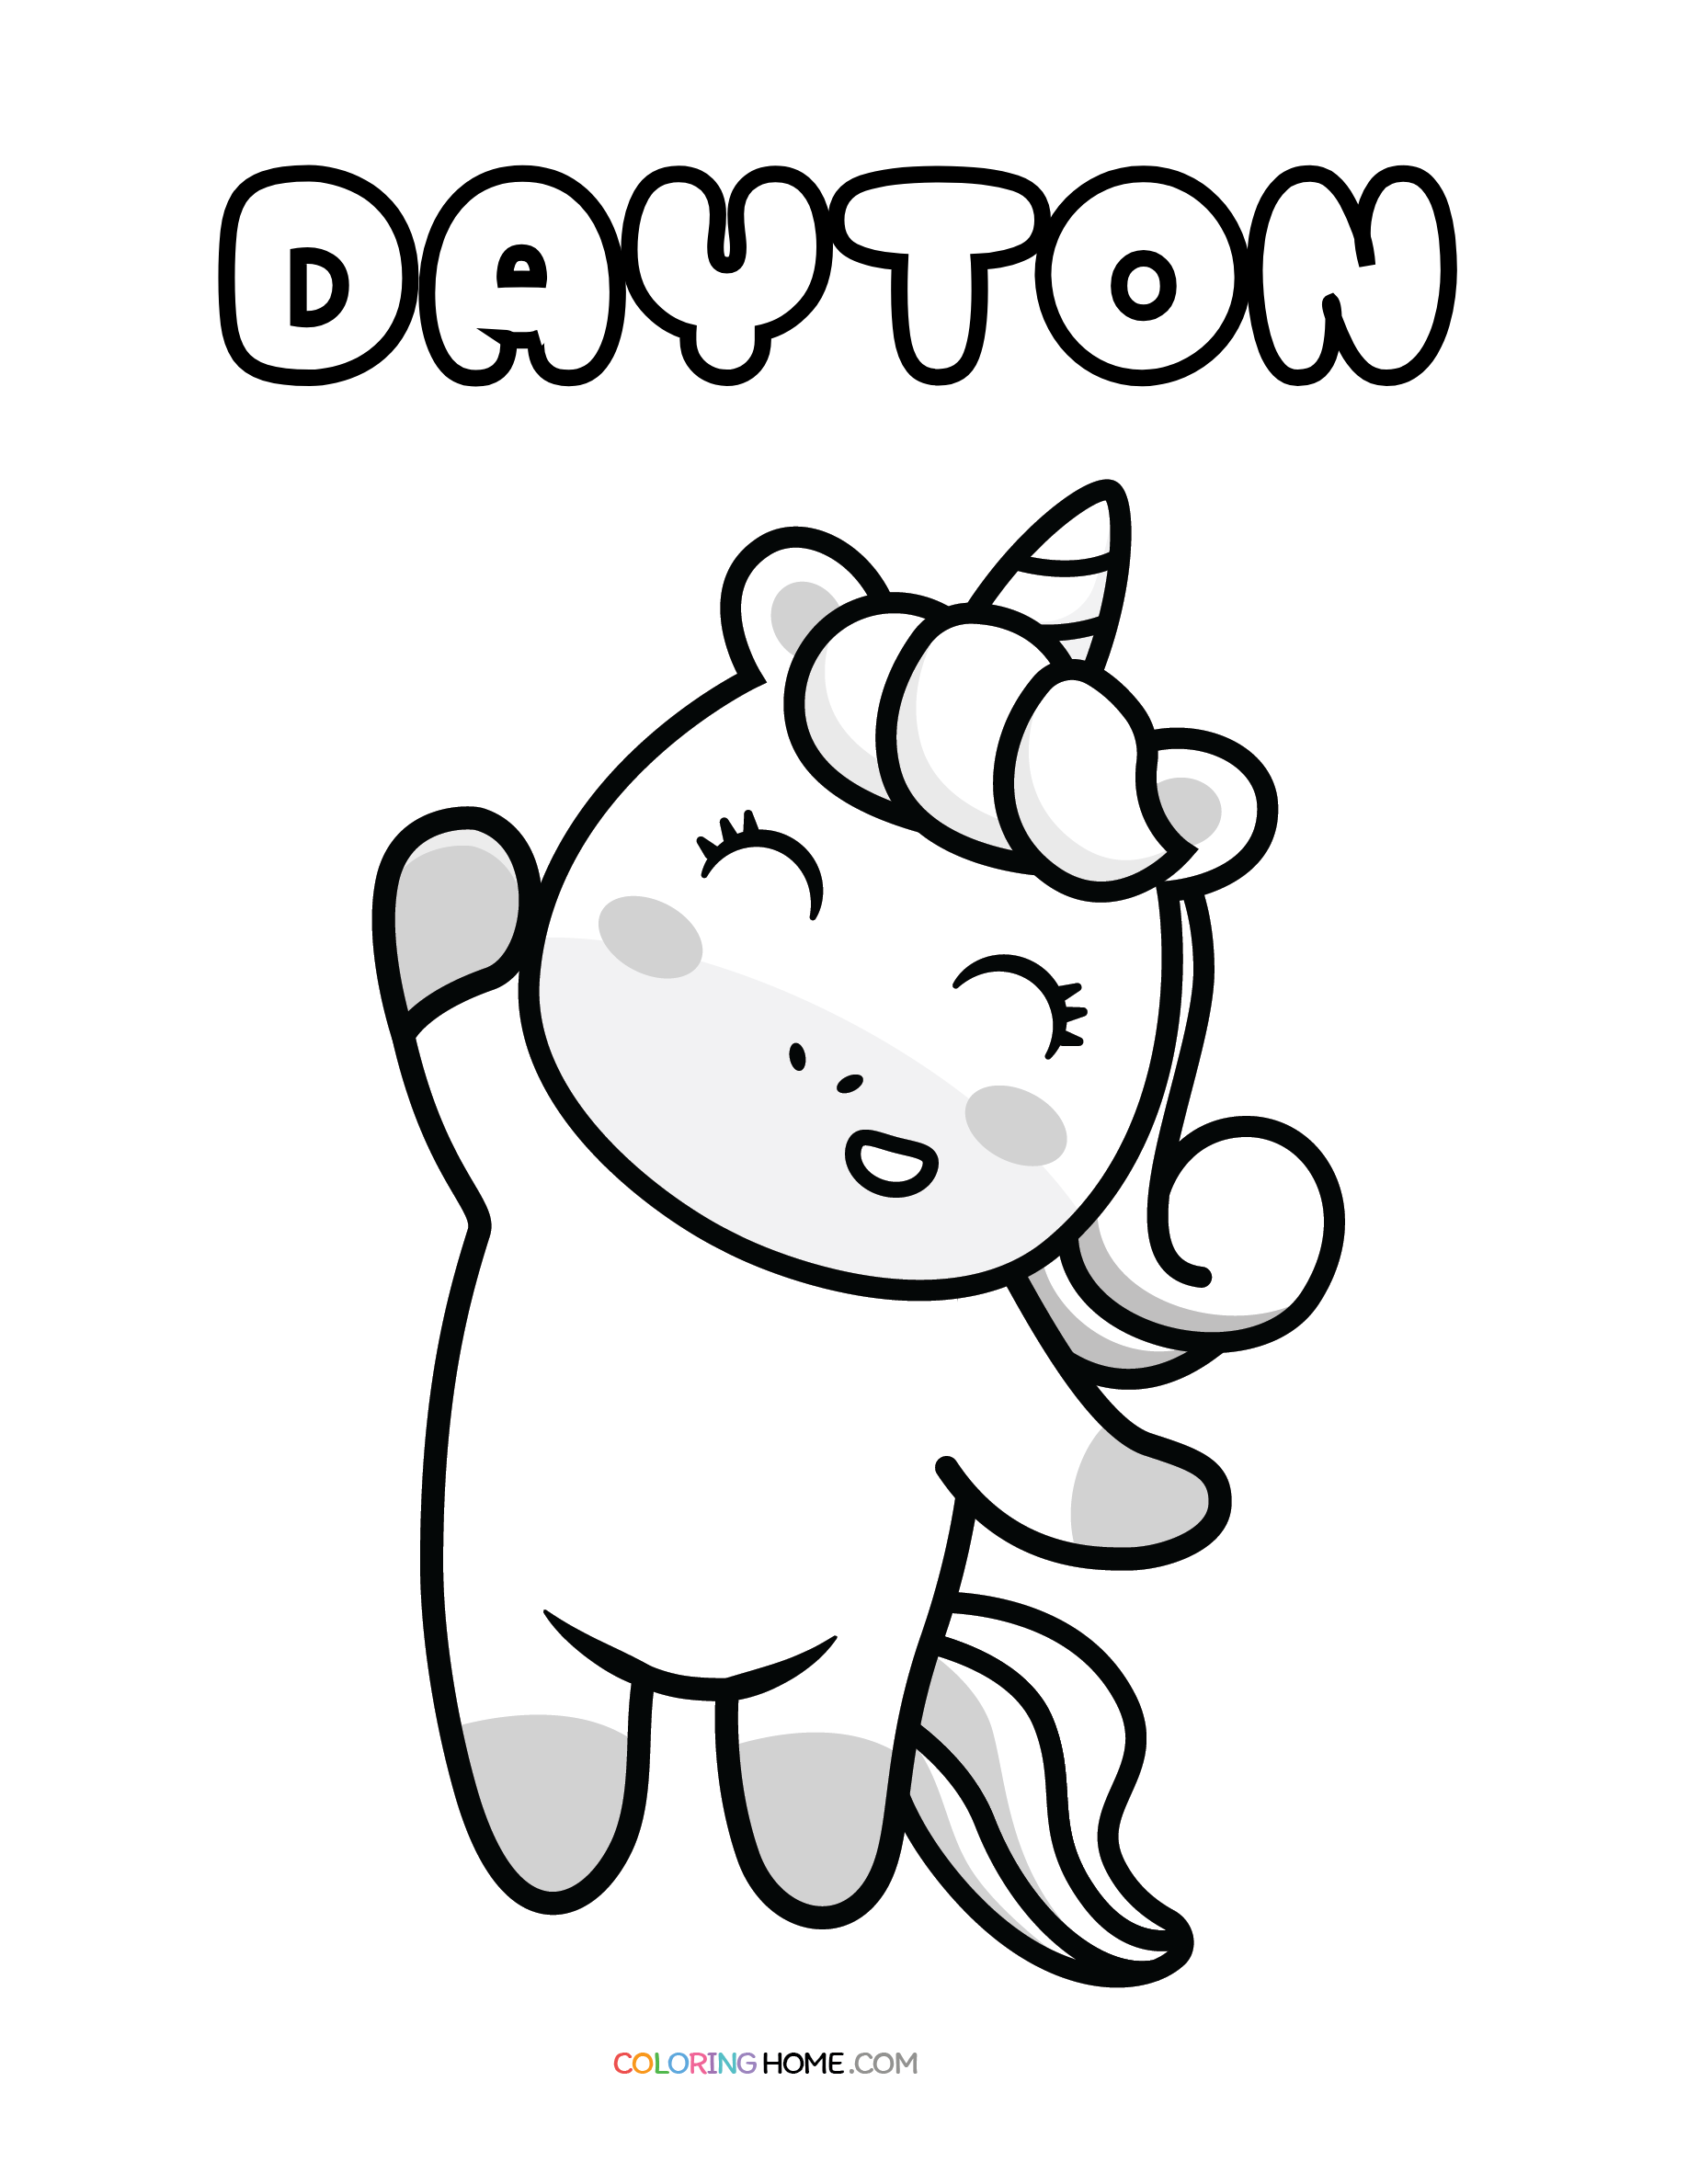 Dayton unicorn coloring page